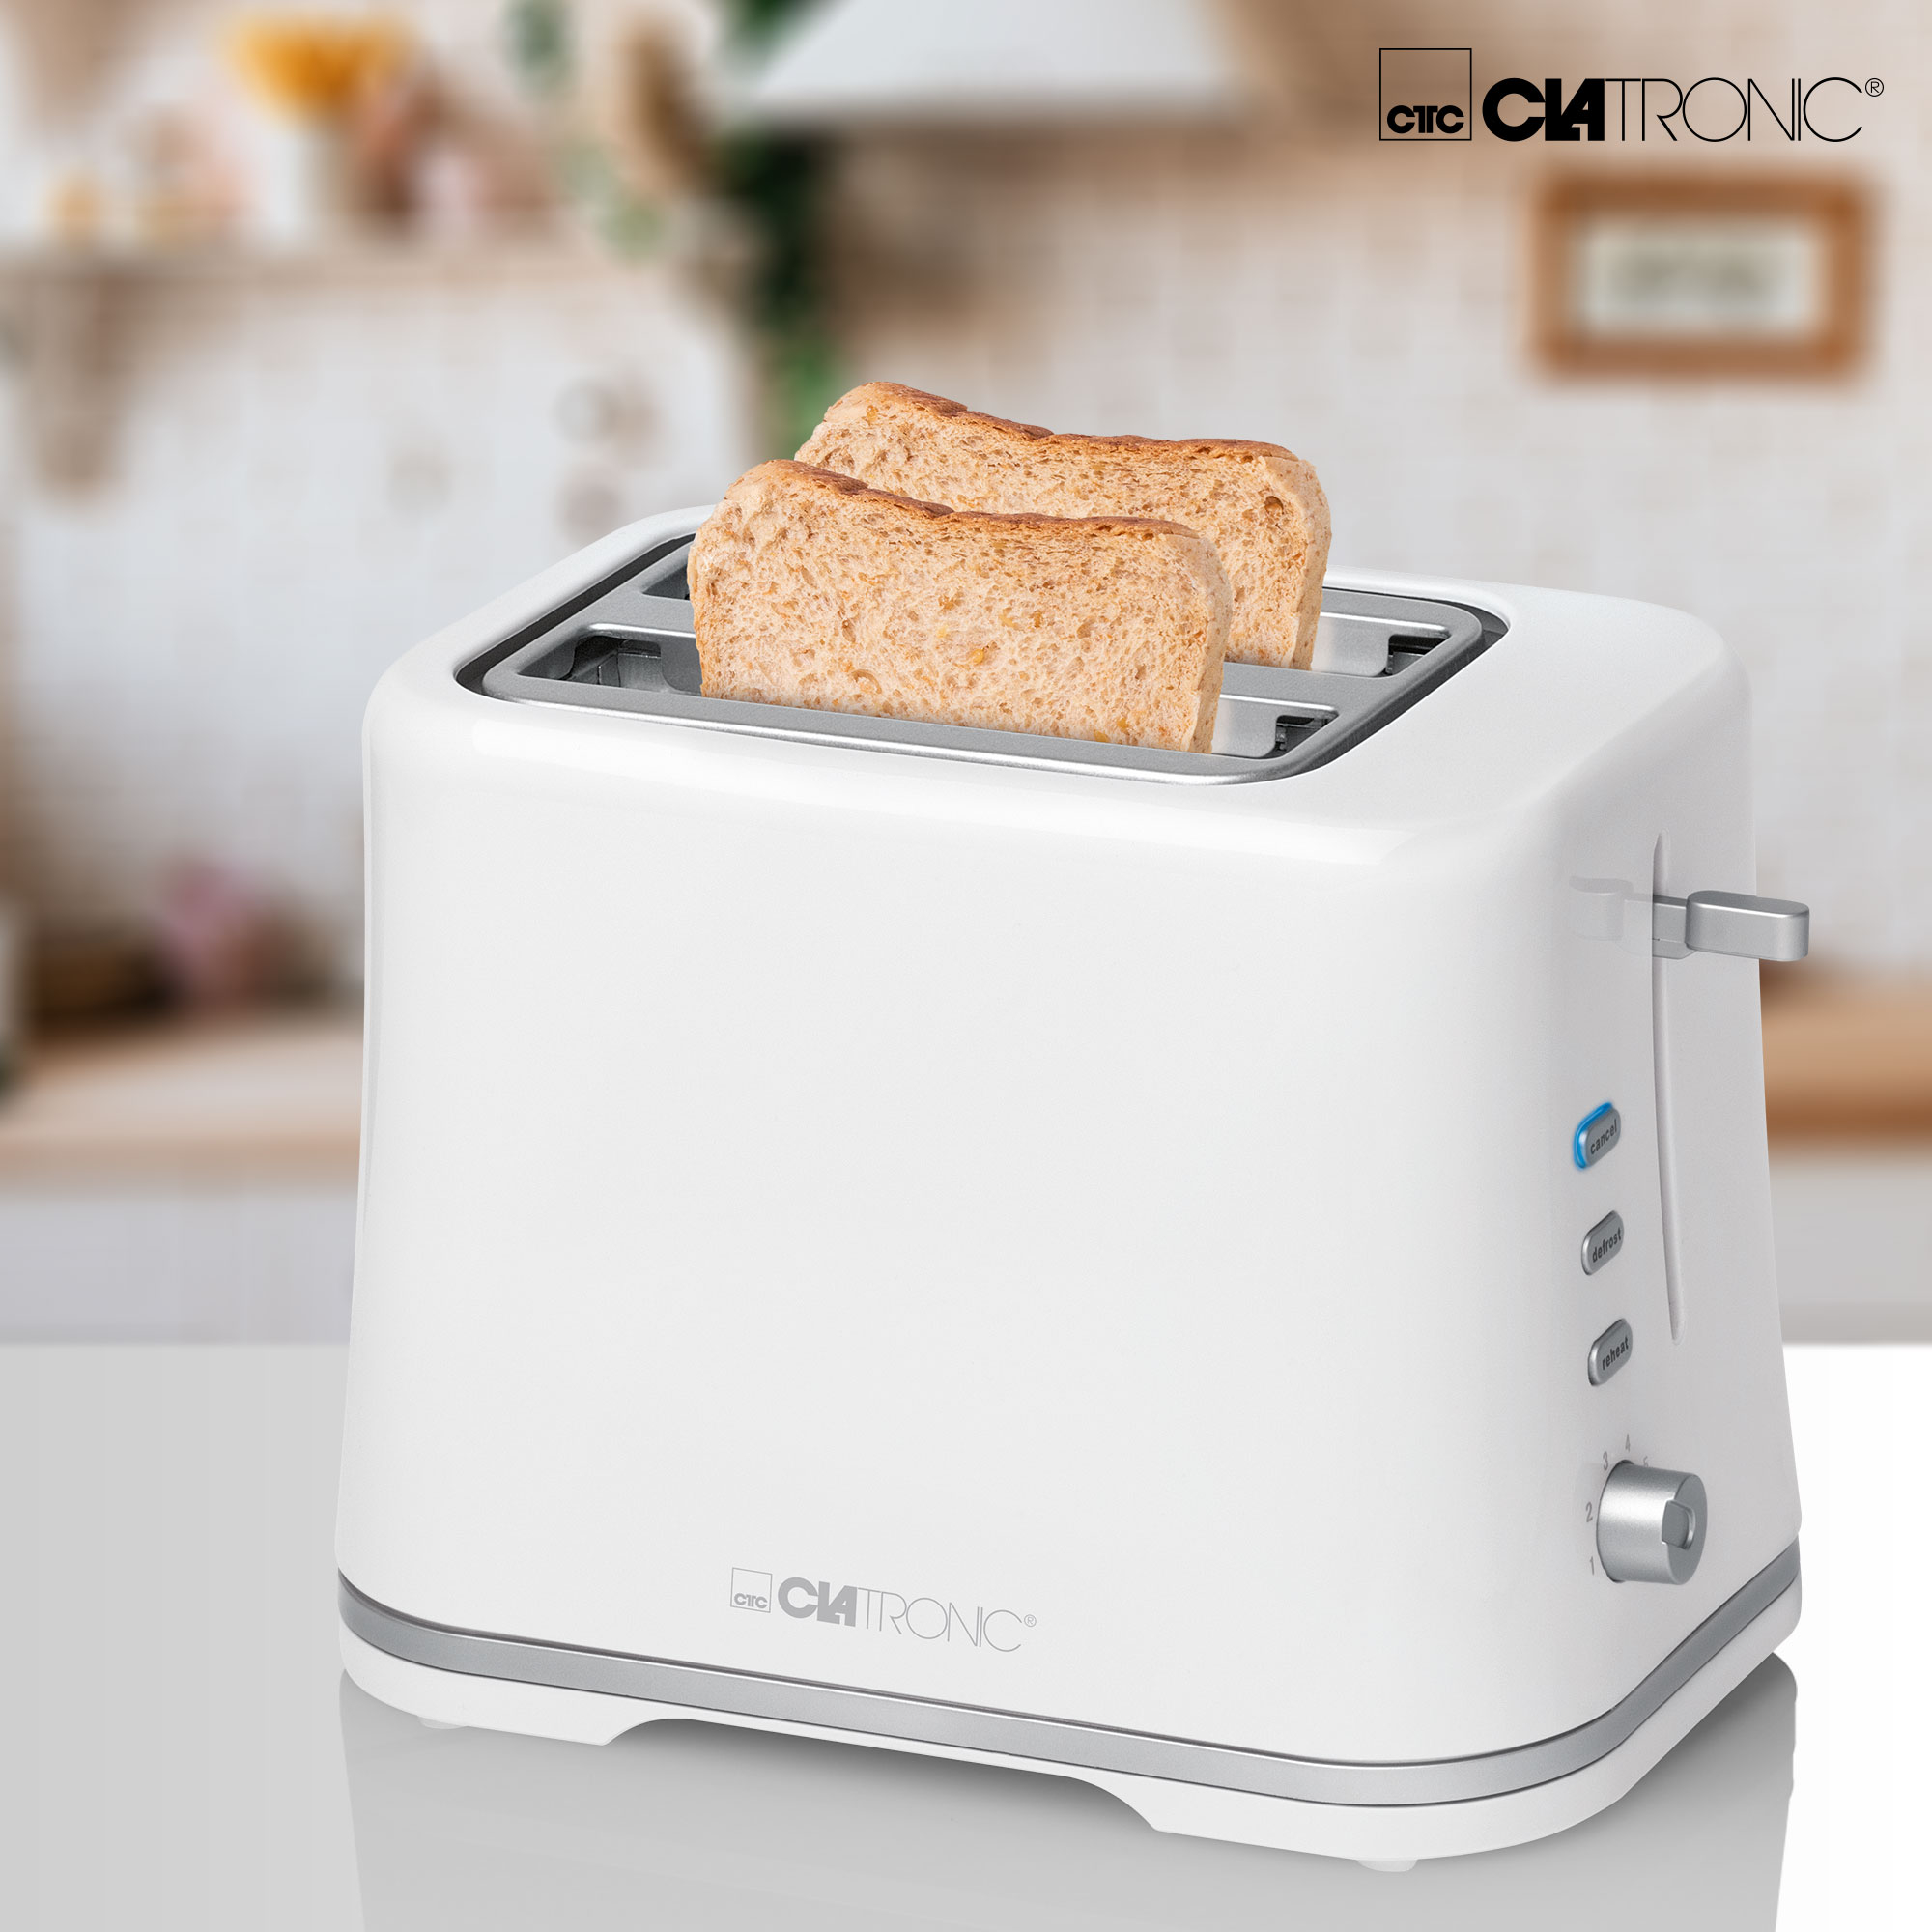 CLATRONIC TA 3554 (870 Watt, Weiß 2) Toaster Schlitze